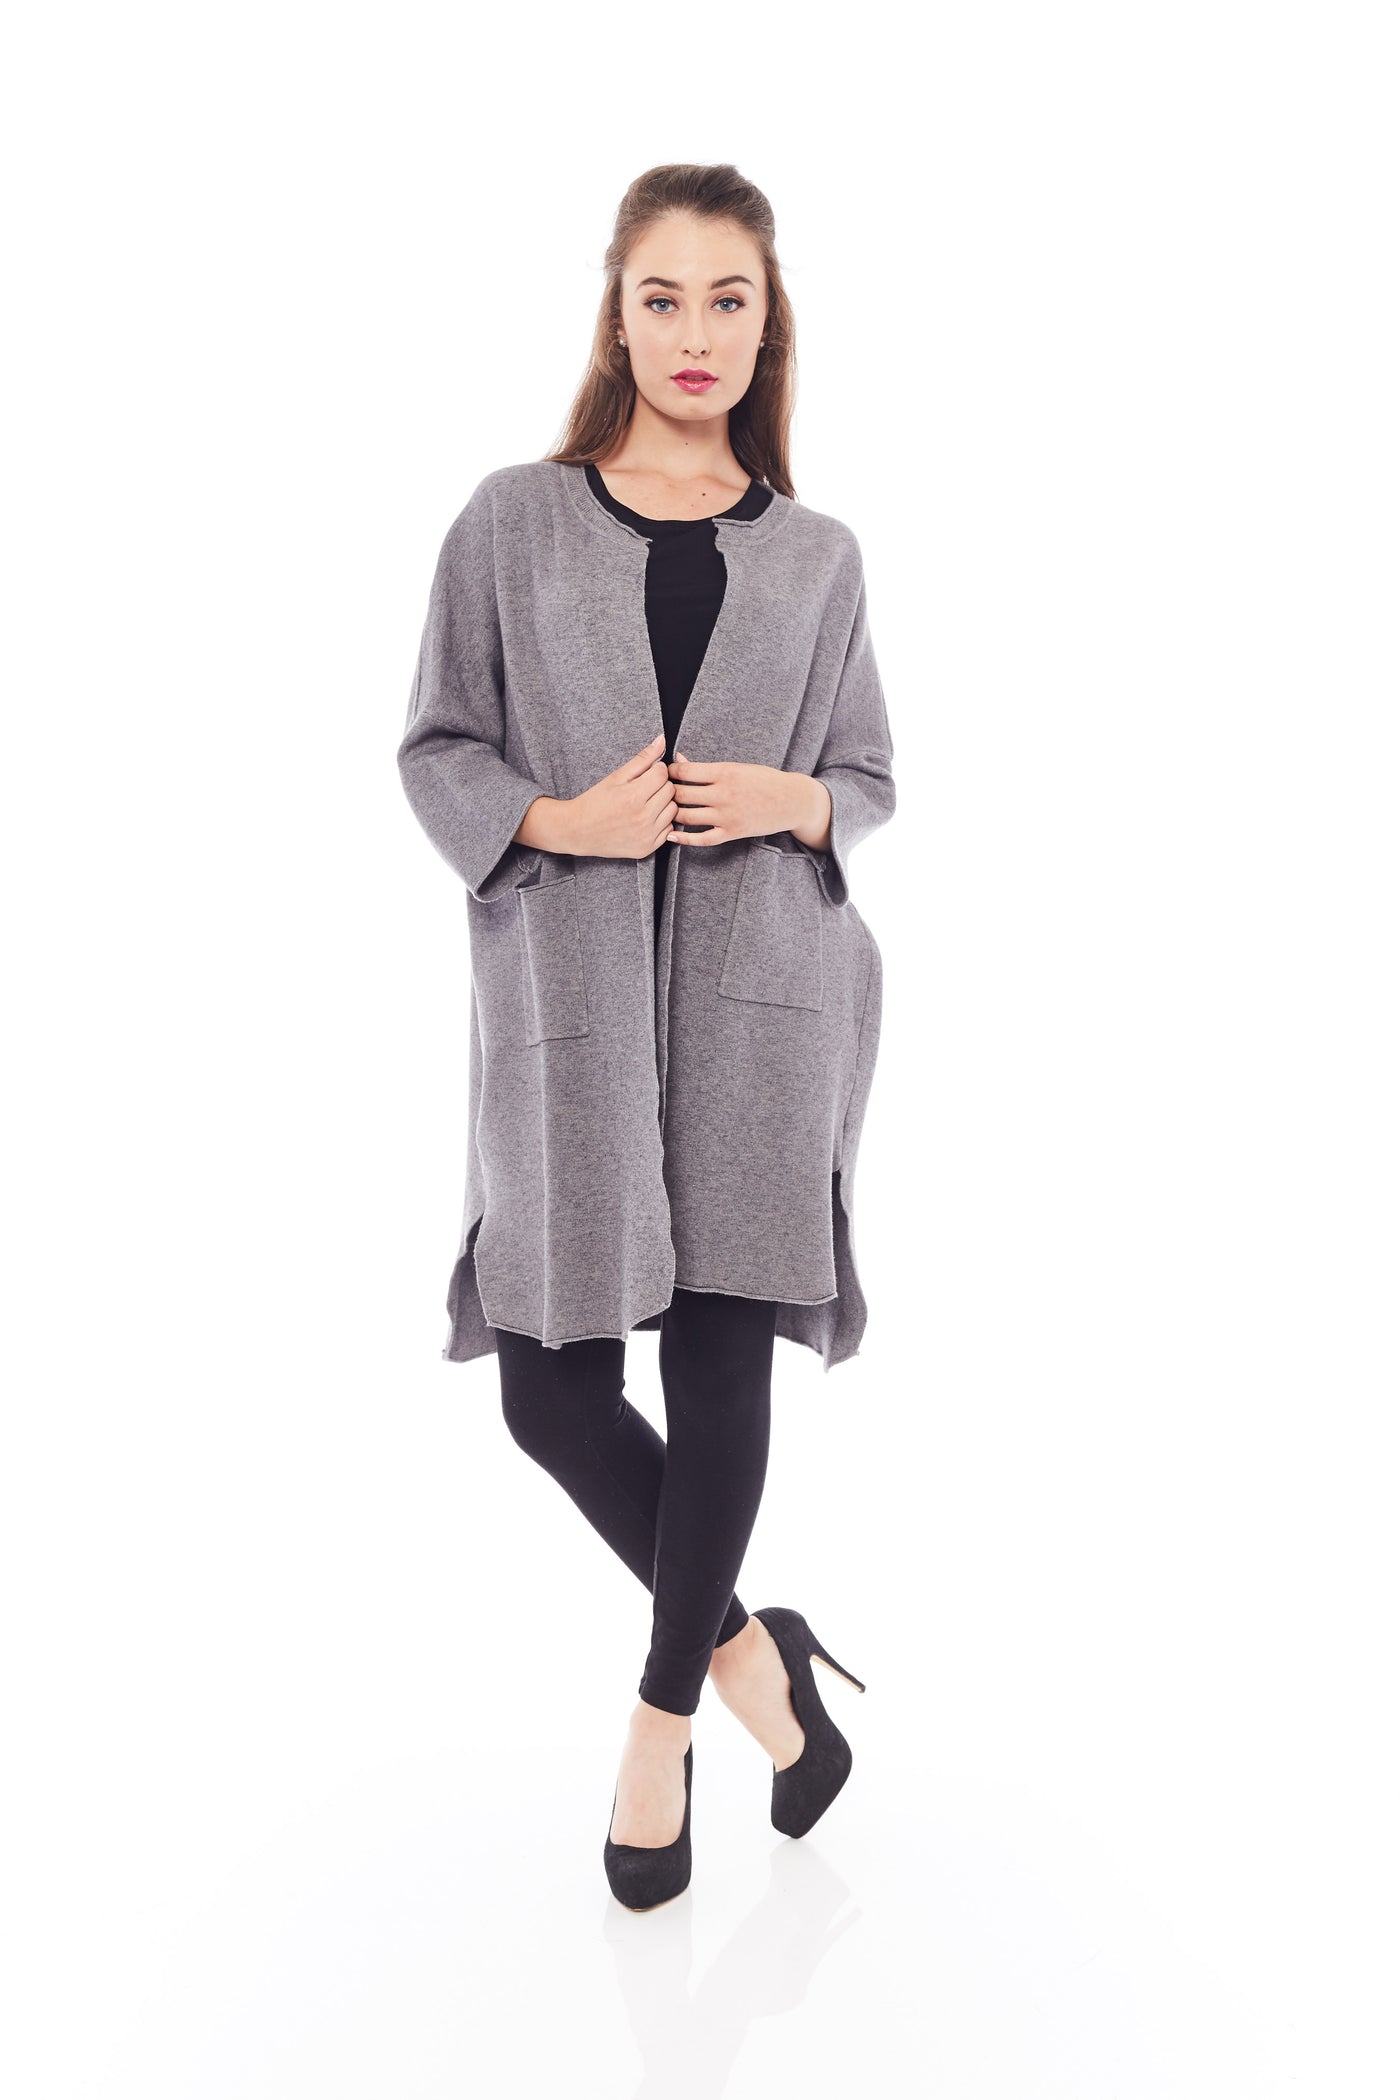 Buy Women's Grey Cardigans & Round Neck Sweaters Online